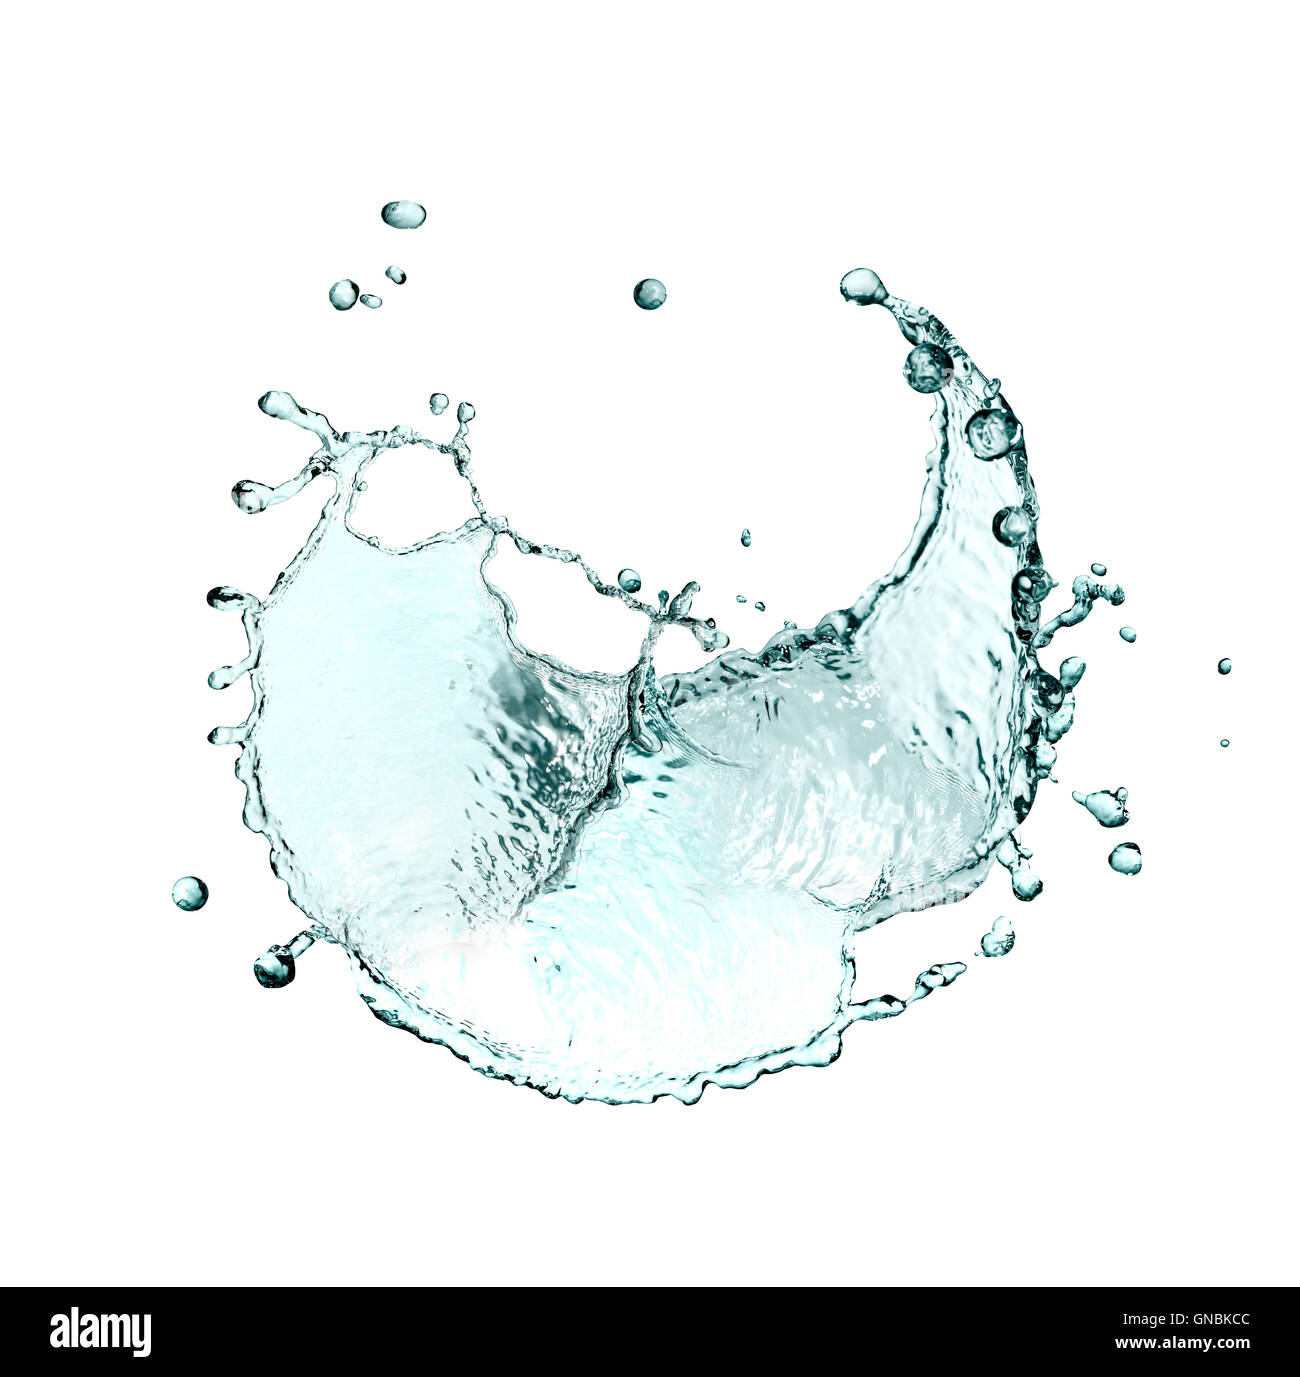 Splashing Water Abstract Stock Photo Alamy